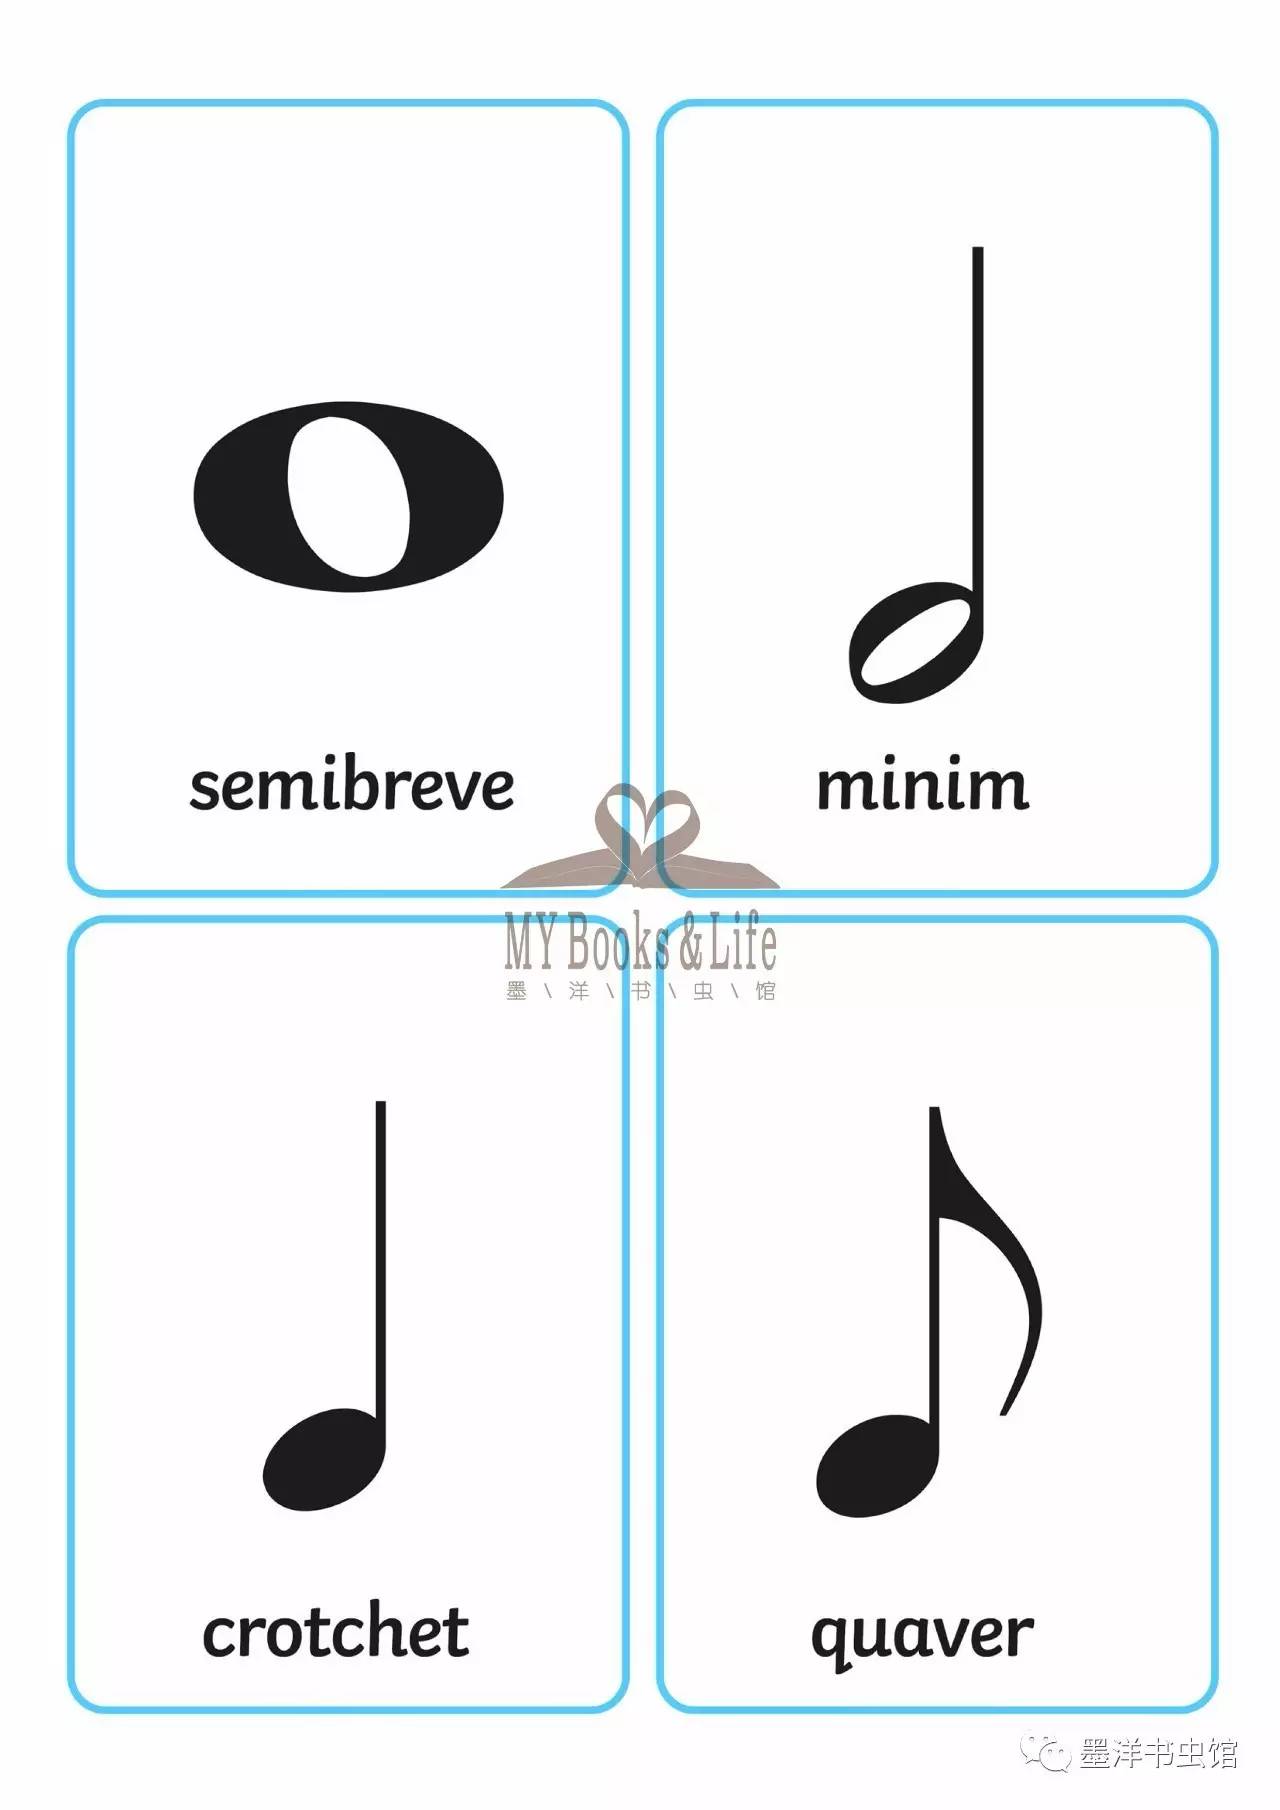 semibreve 全音符 ※ minim 半音符 ※ crotchet 四分音符